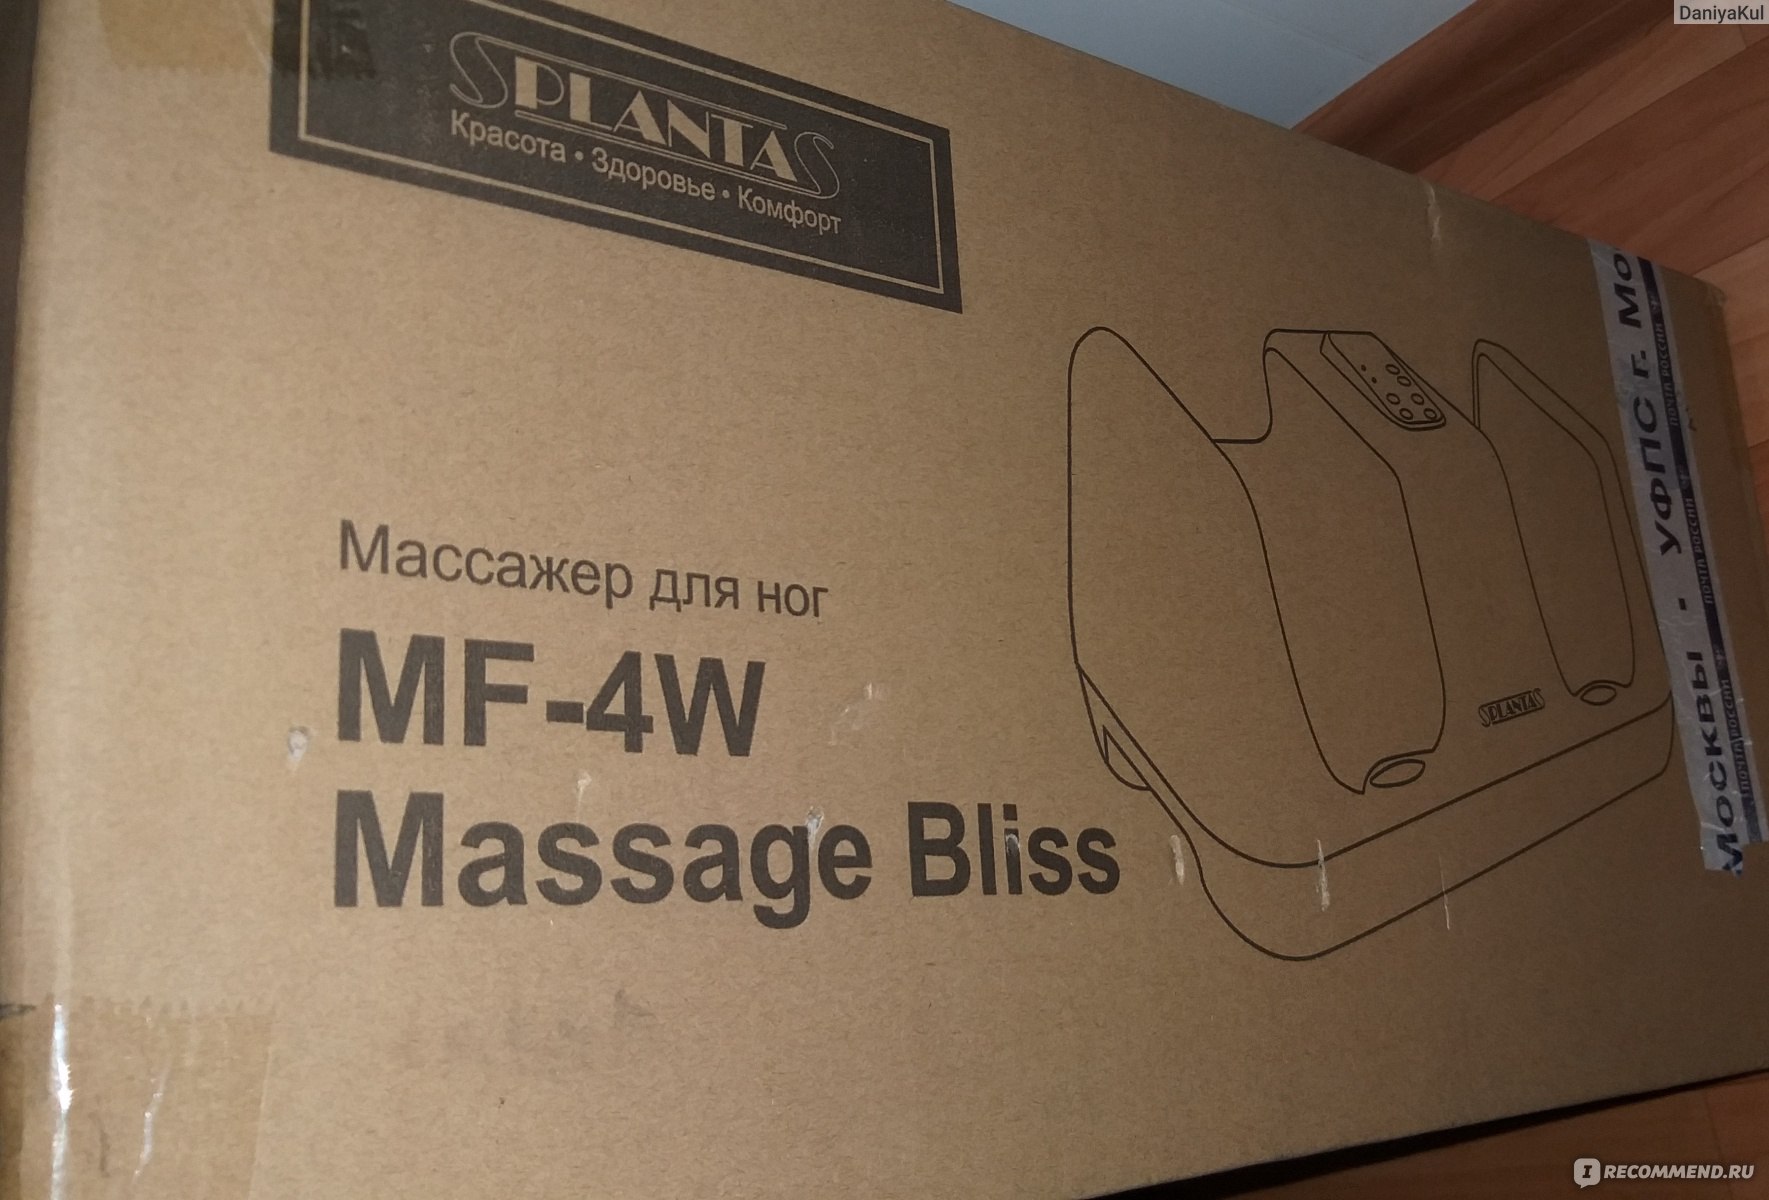 Mf 4w massage bliss. Массажер для ног planta MF-4w massage Bliss белый, черный. Massage Bliss инструкция.